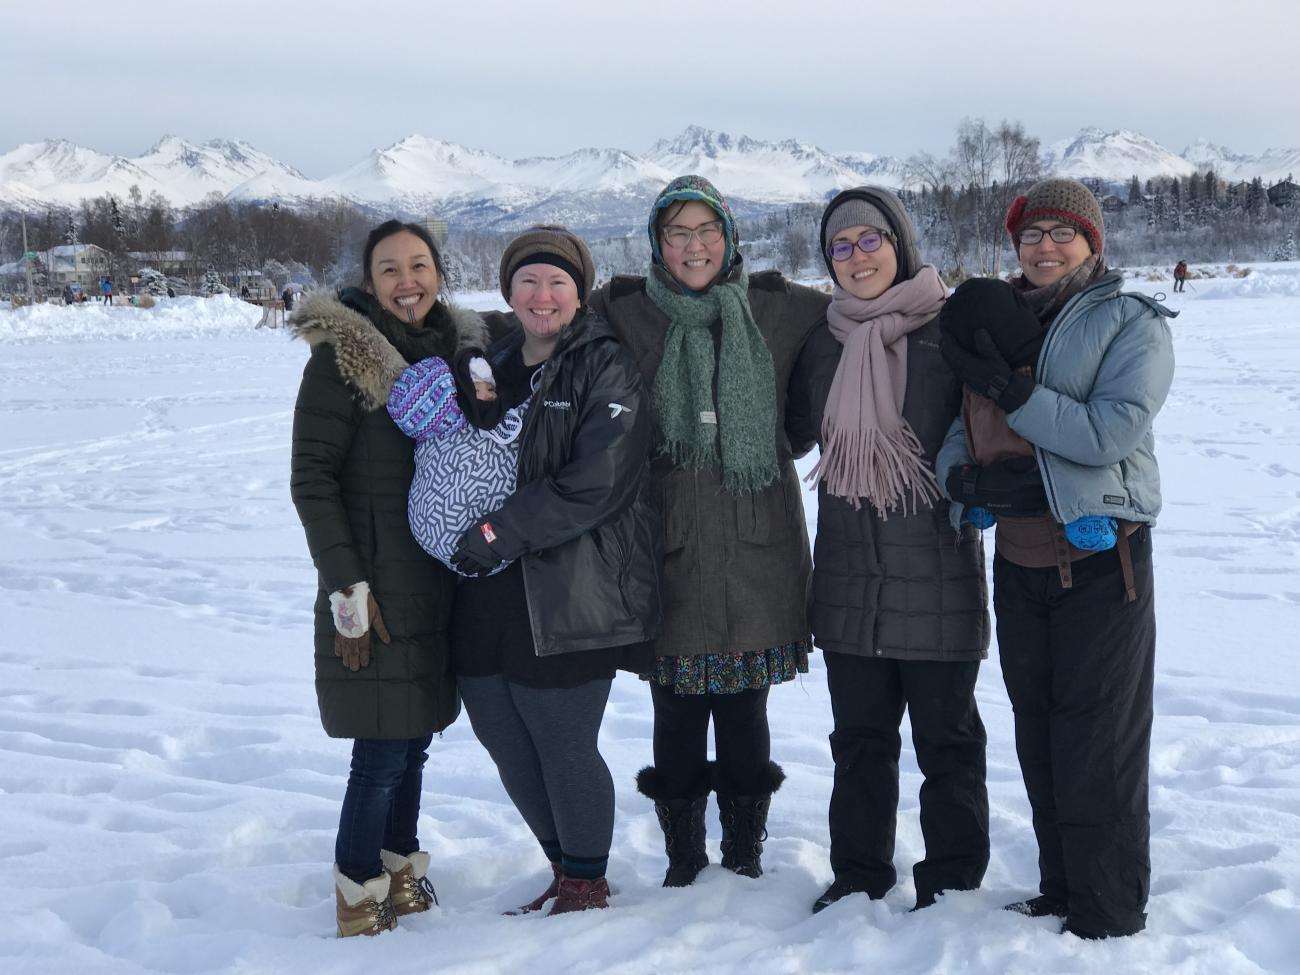 Alaska Native Birthworkers Community founders enjoying a winter day in Anchorage. (L-R): Charlene Apok, Olga Lucason, Stacey Lucason, Abra Patkotak, Helena Jacobs,Tala David, Margaret David. Photo by EJ David.